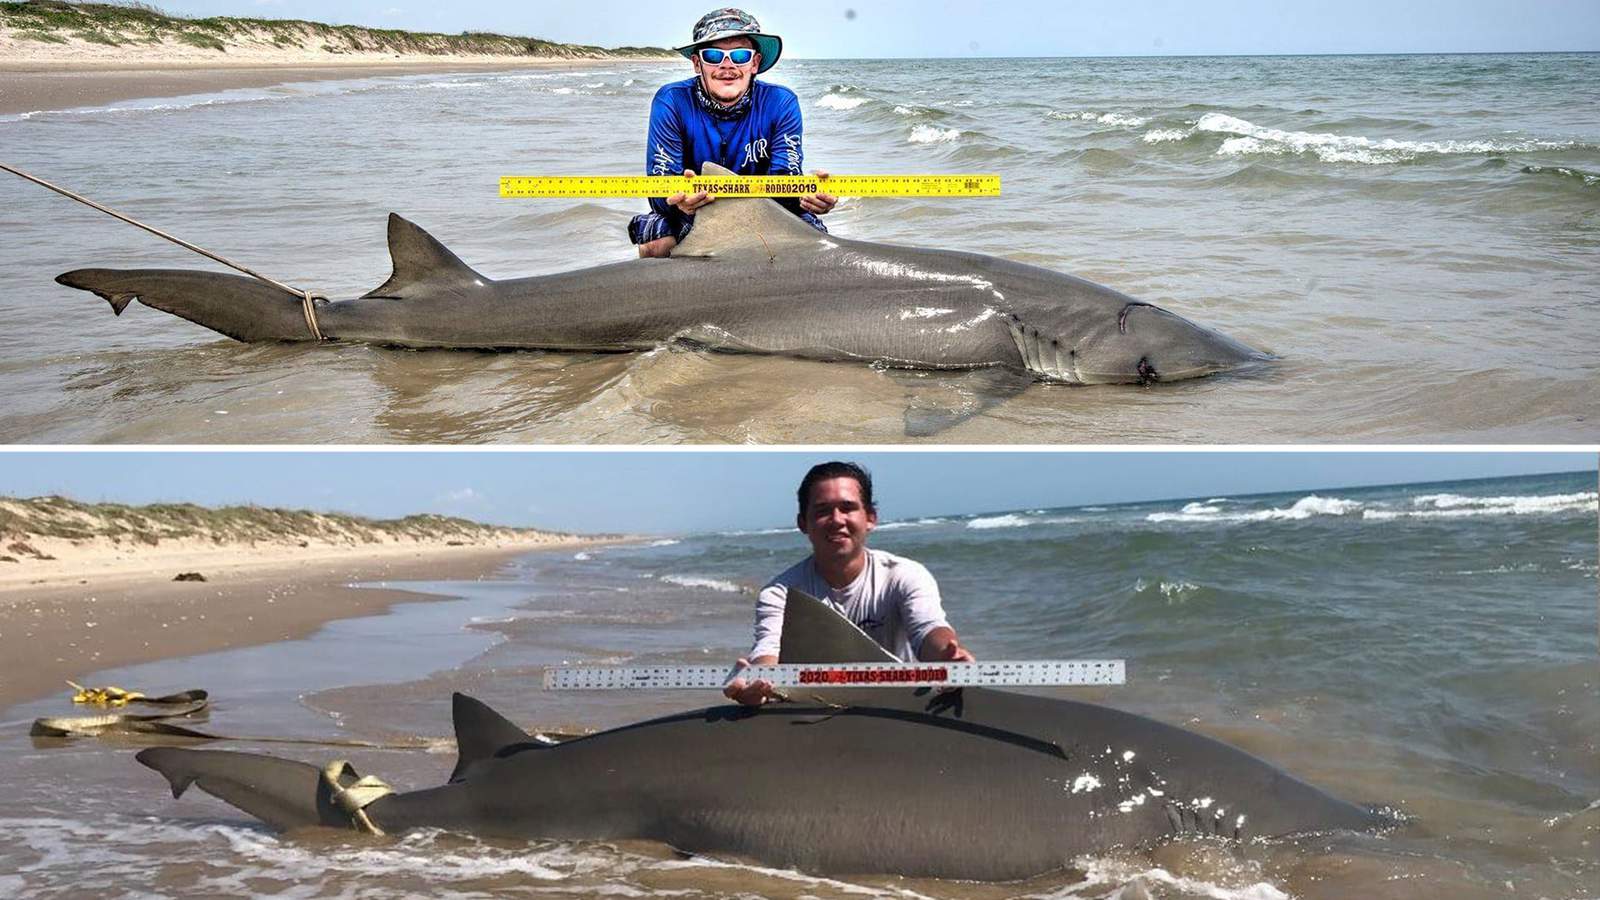 Two Texas anglers catch same 10+ foot lemon shark on Padre Island National Seashore 1 year apart